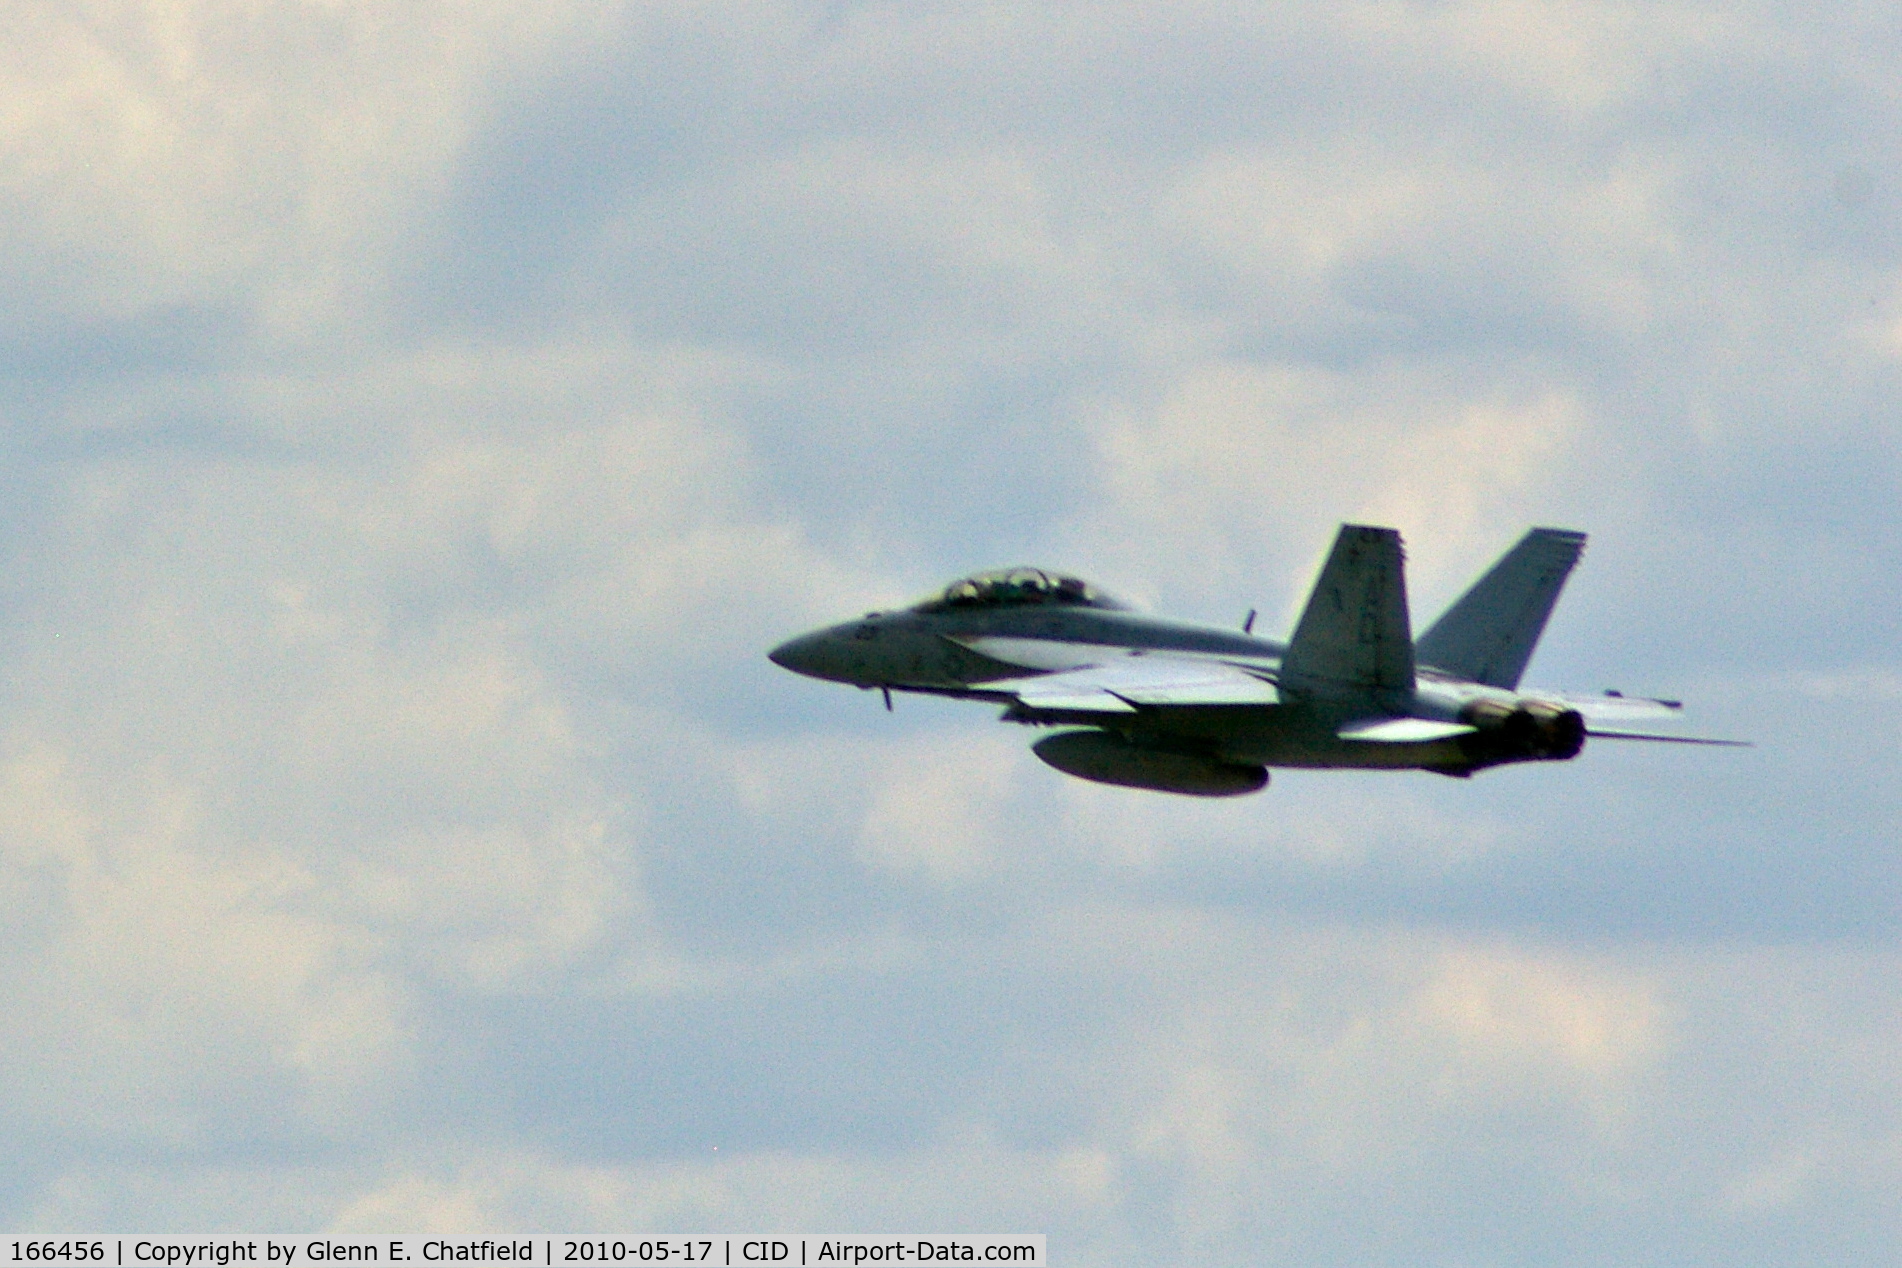 166456, Boeing F/A-18F Super Hornet C/N F091, Departing Runway 9 - just popped up behind hangars.